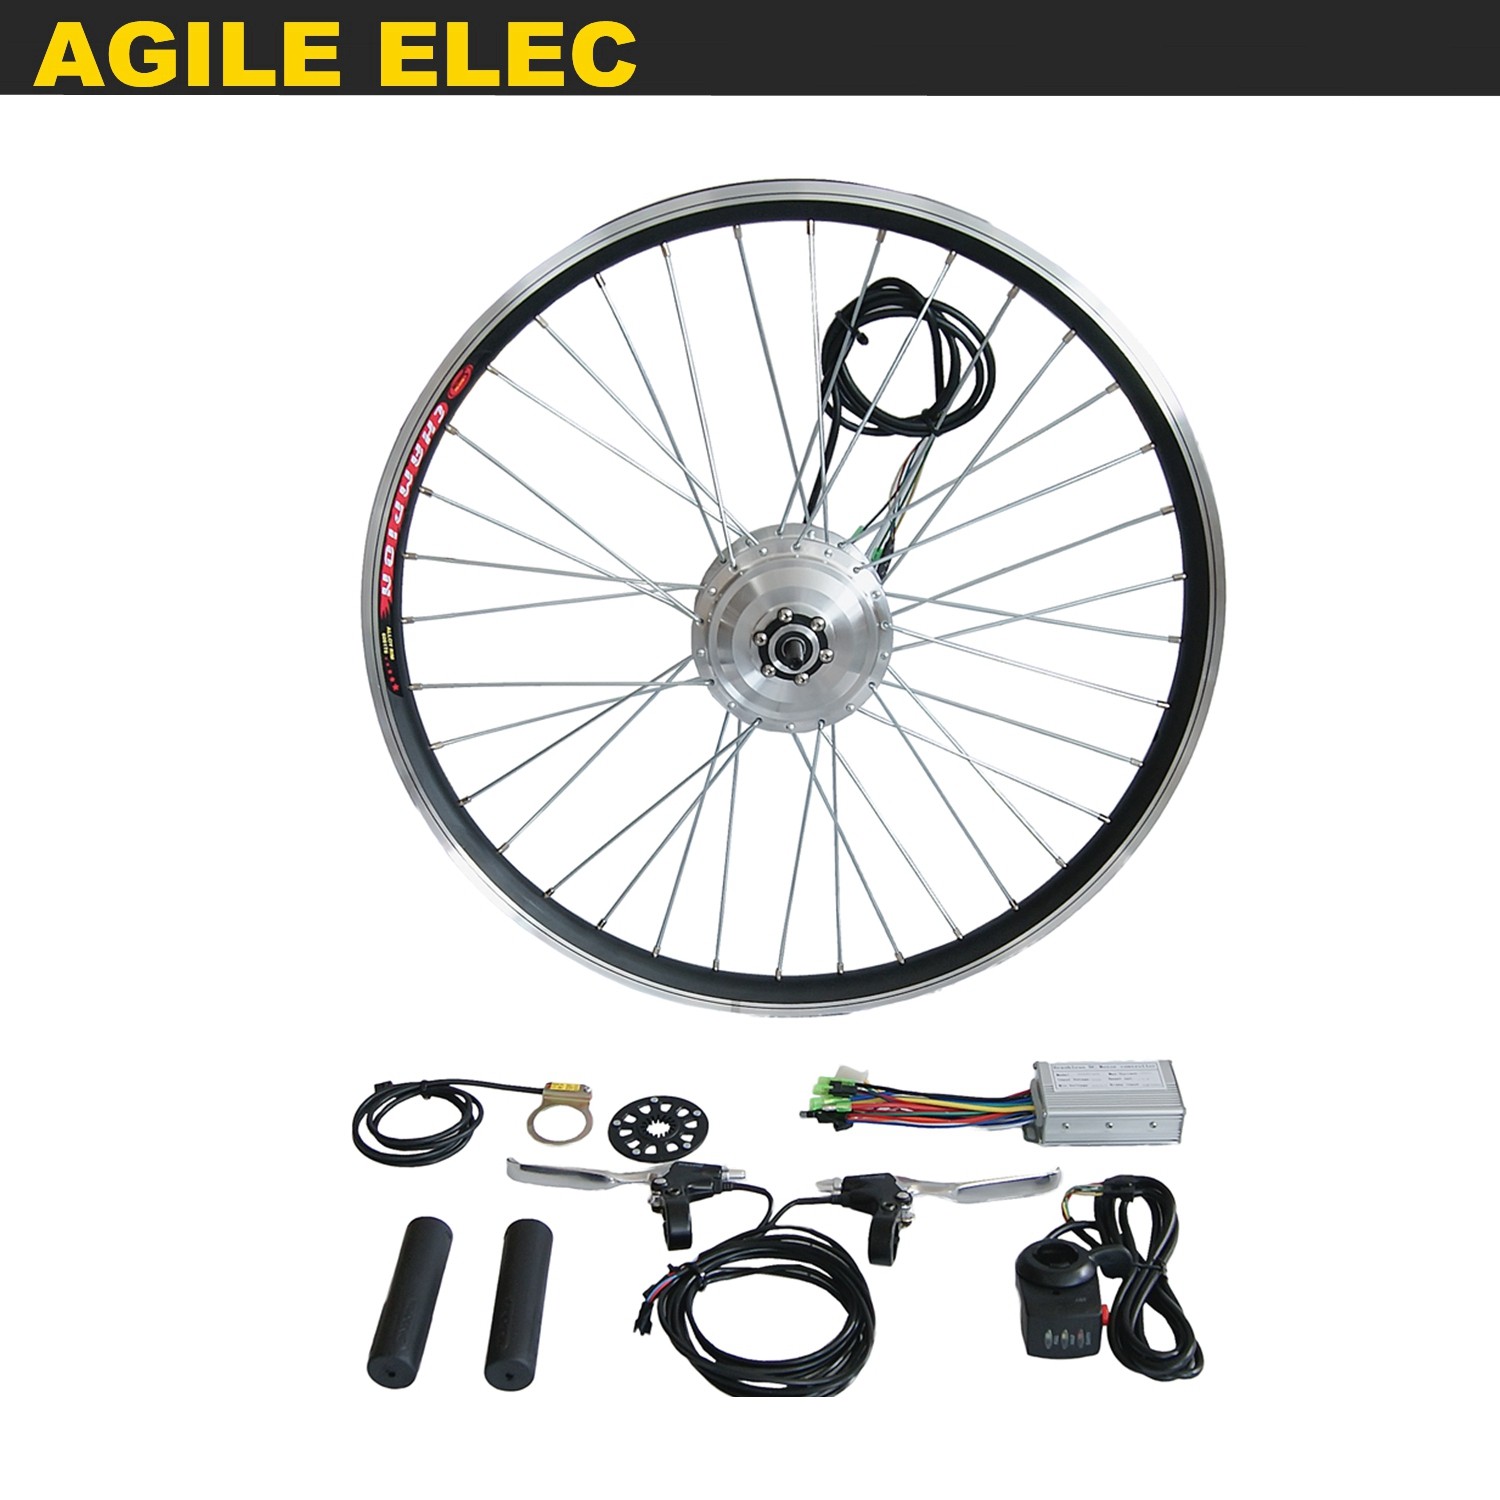 Electric bicycle kit.jpg